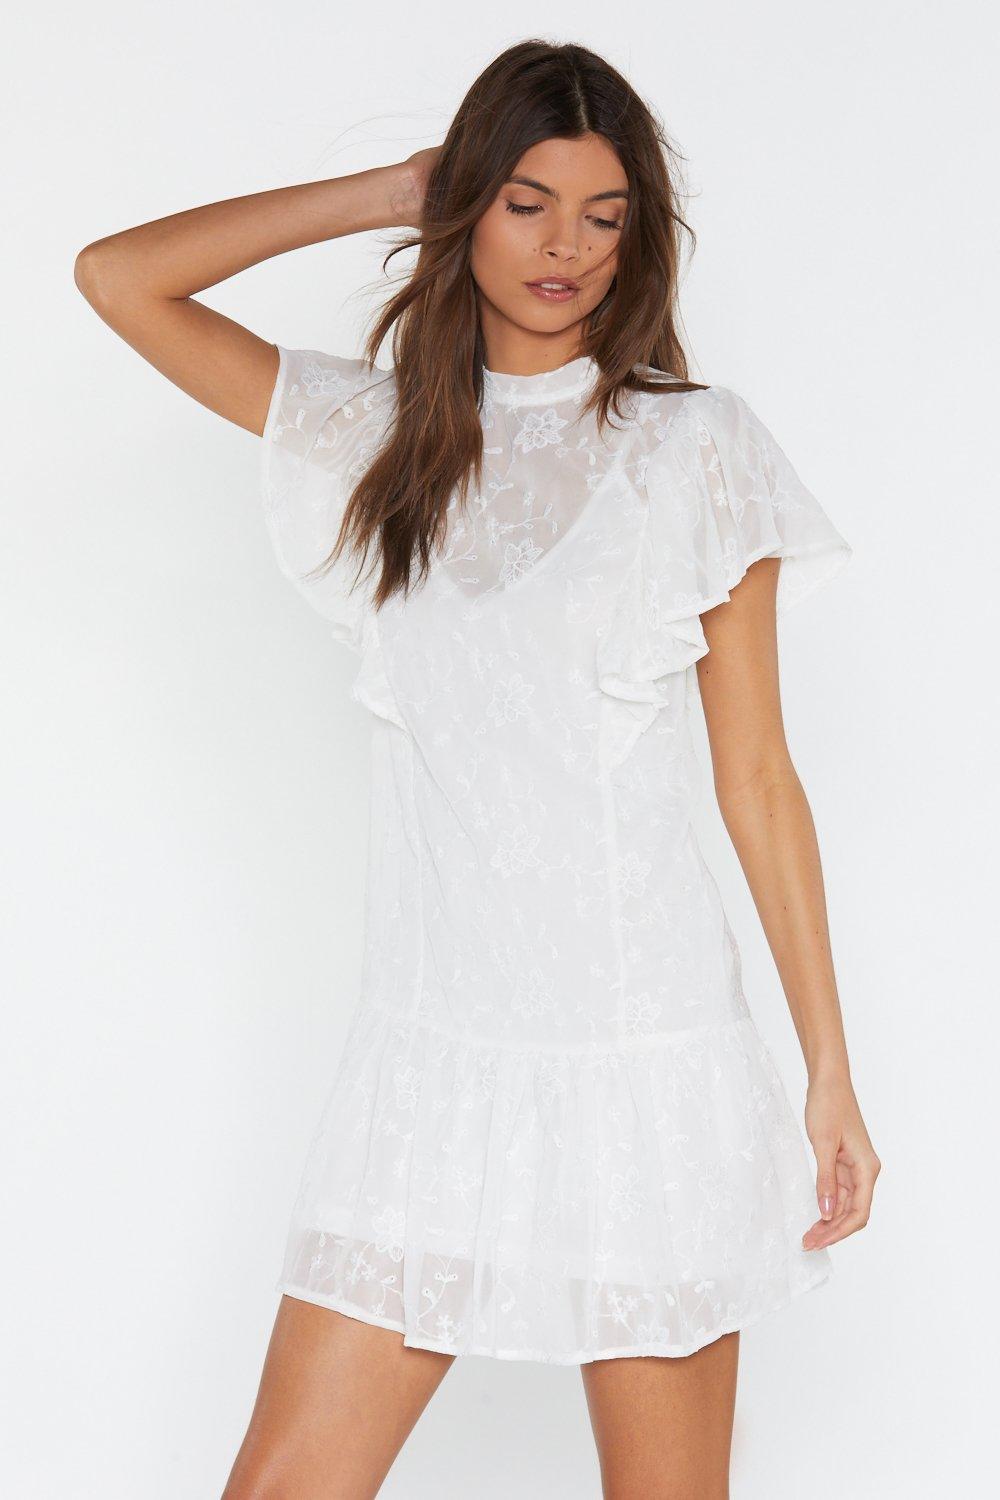 white ruffle smock dress